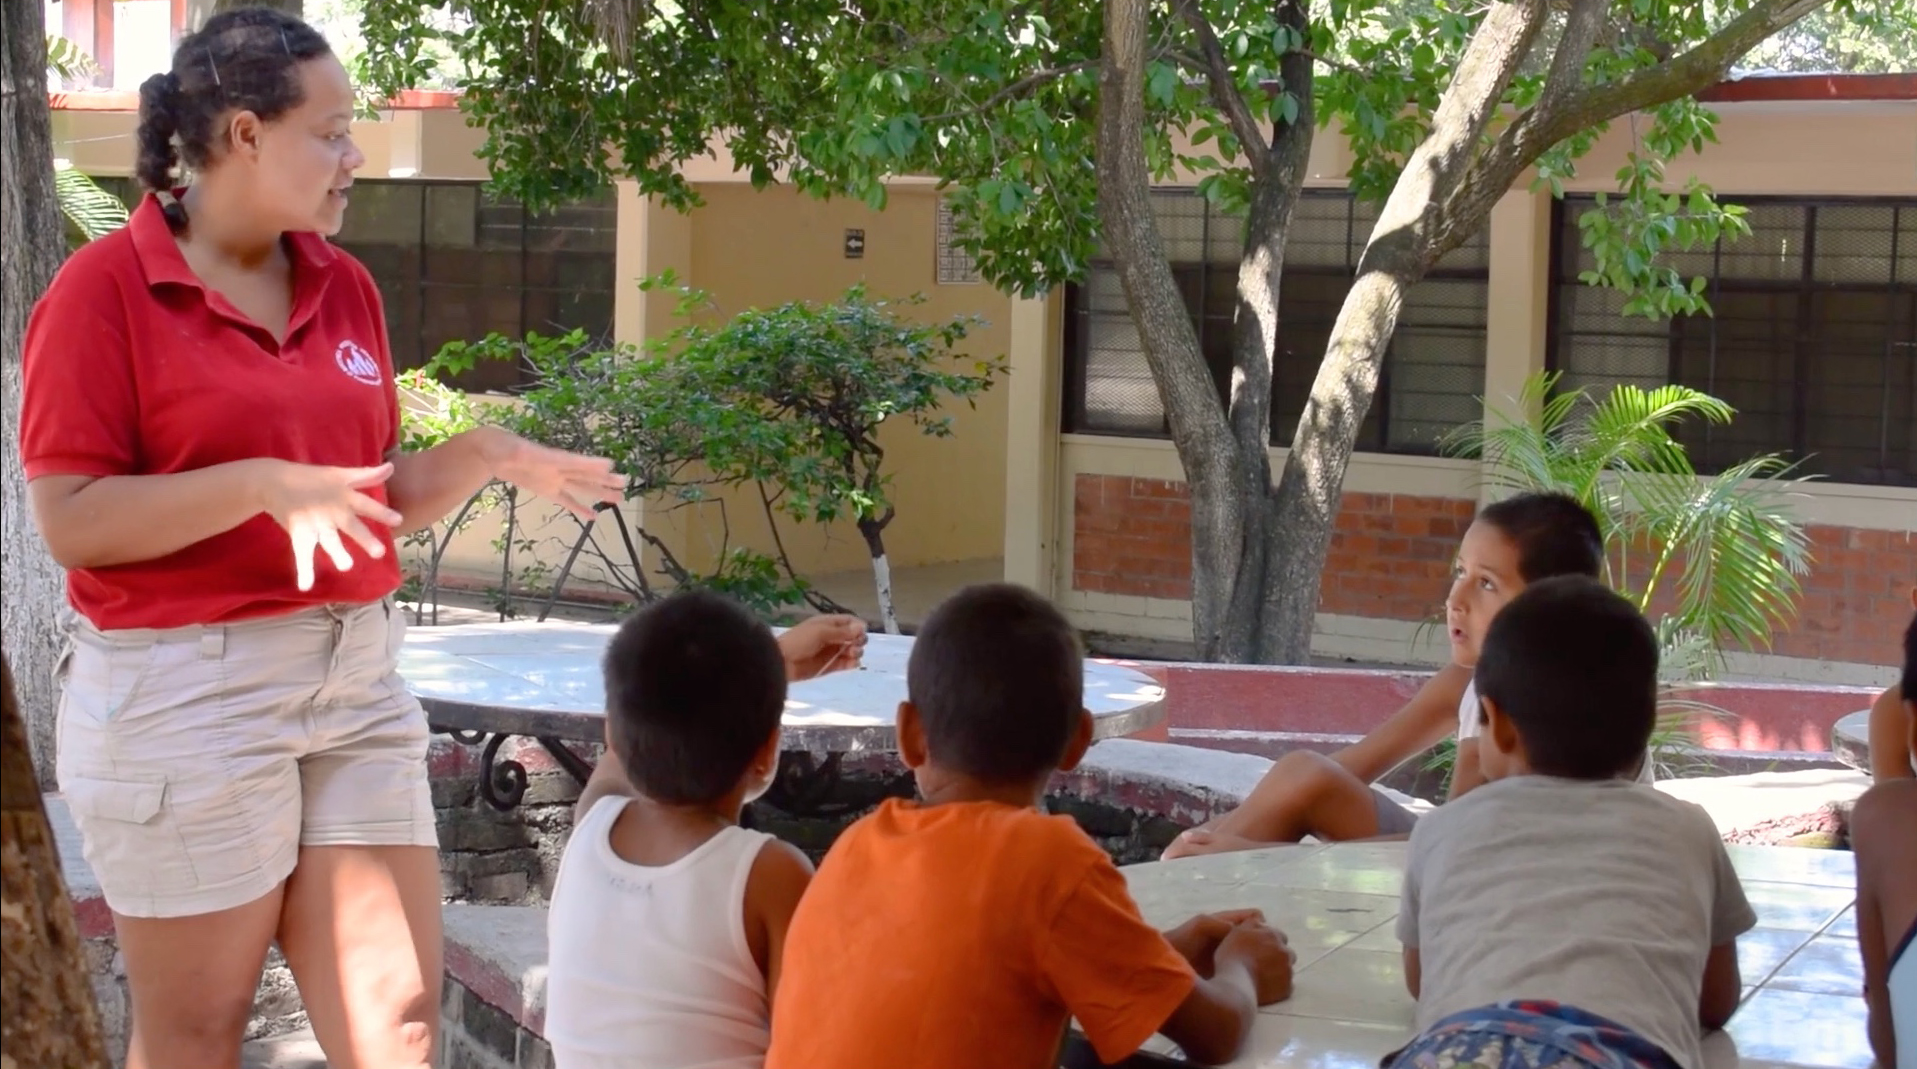 Alaina Hall teaching kids in Mexico